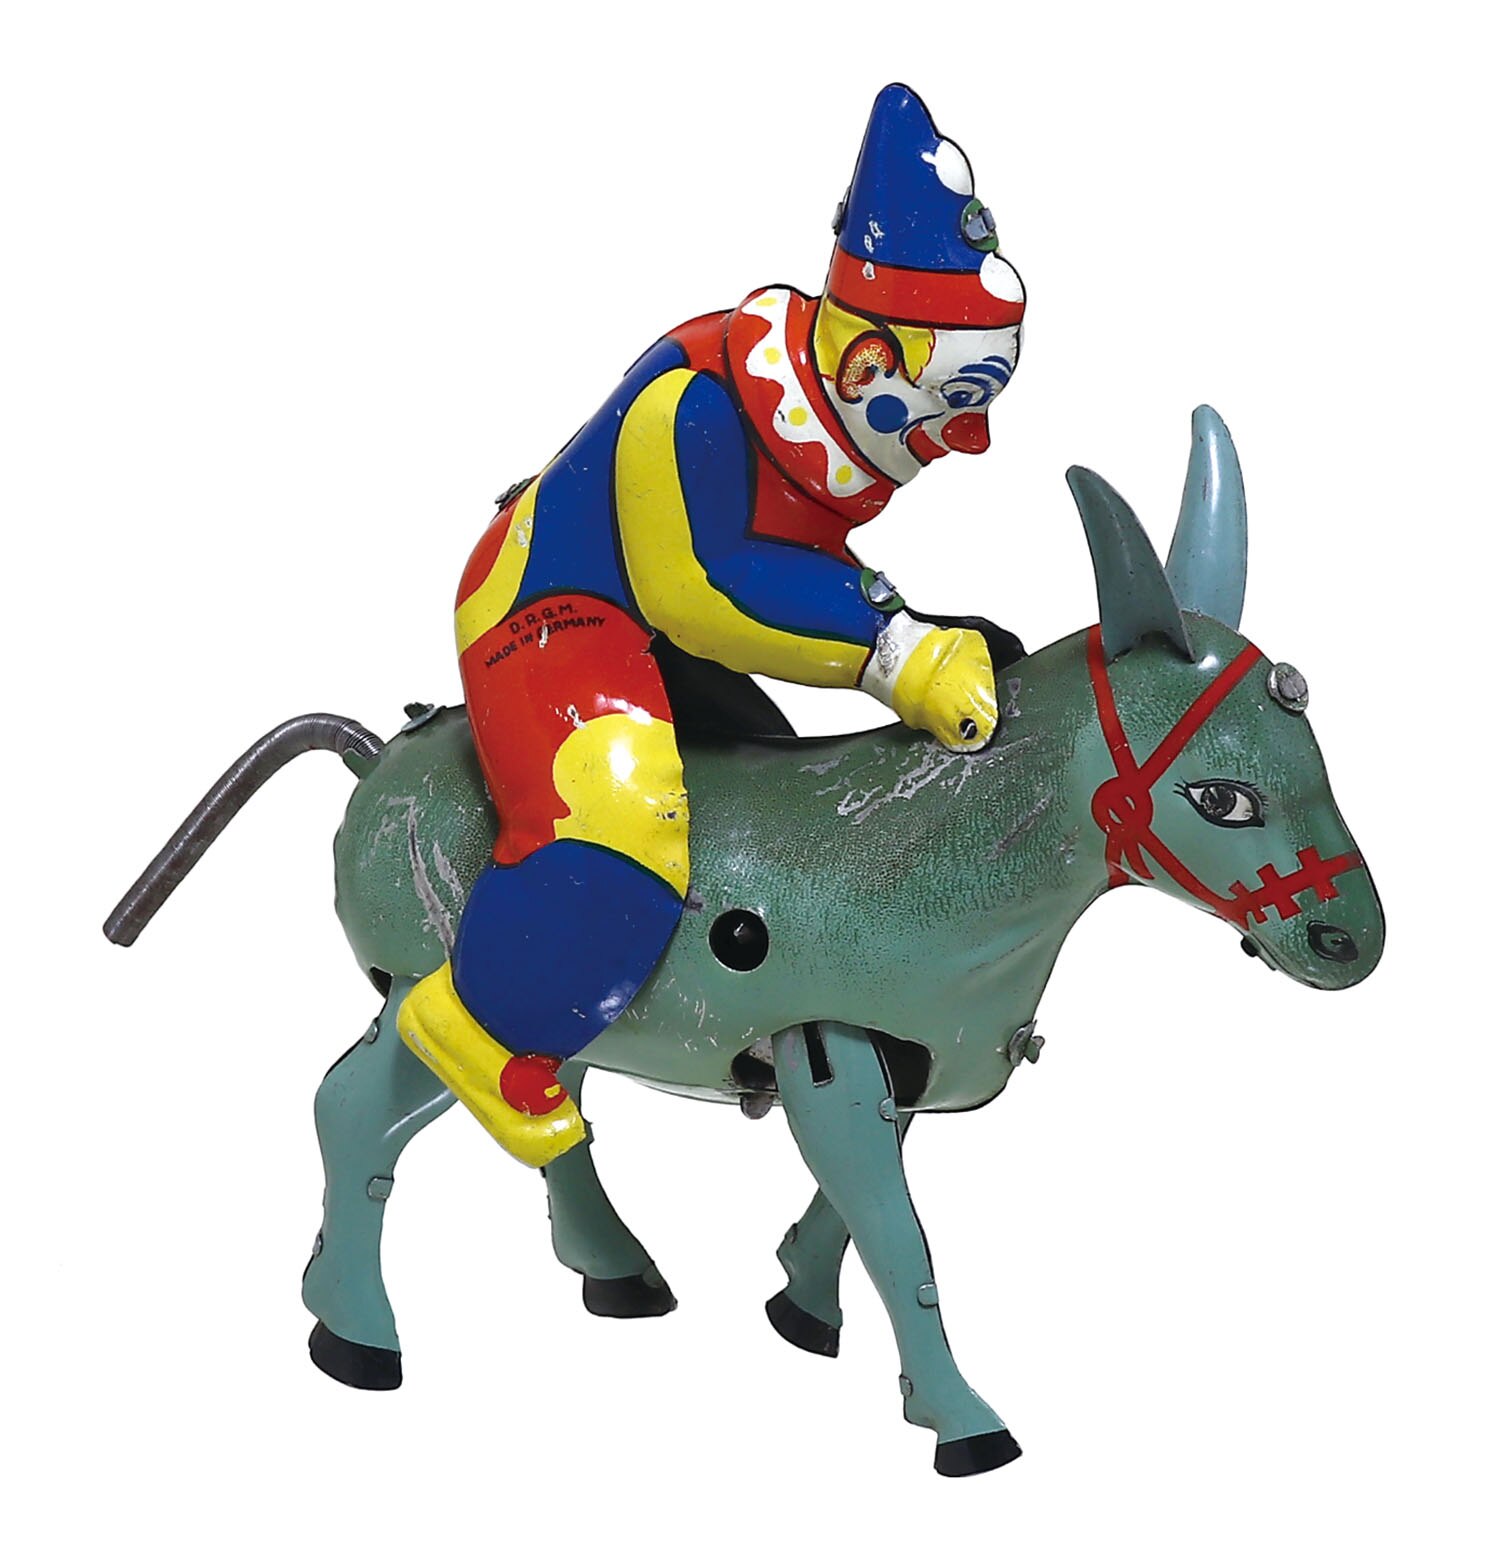 Clown riding a donkey